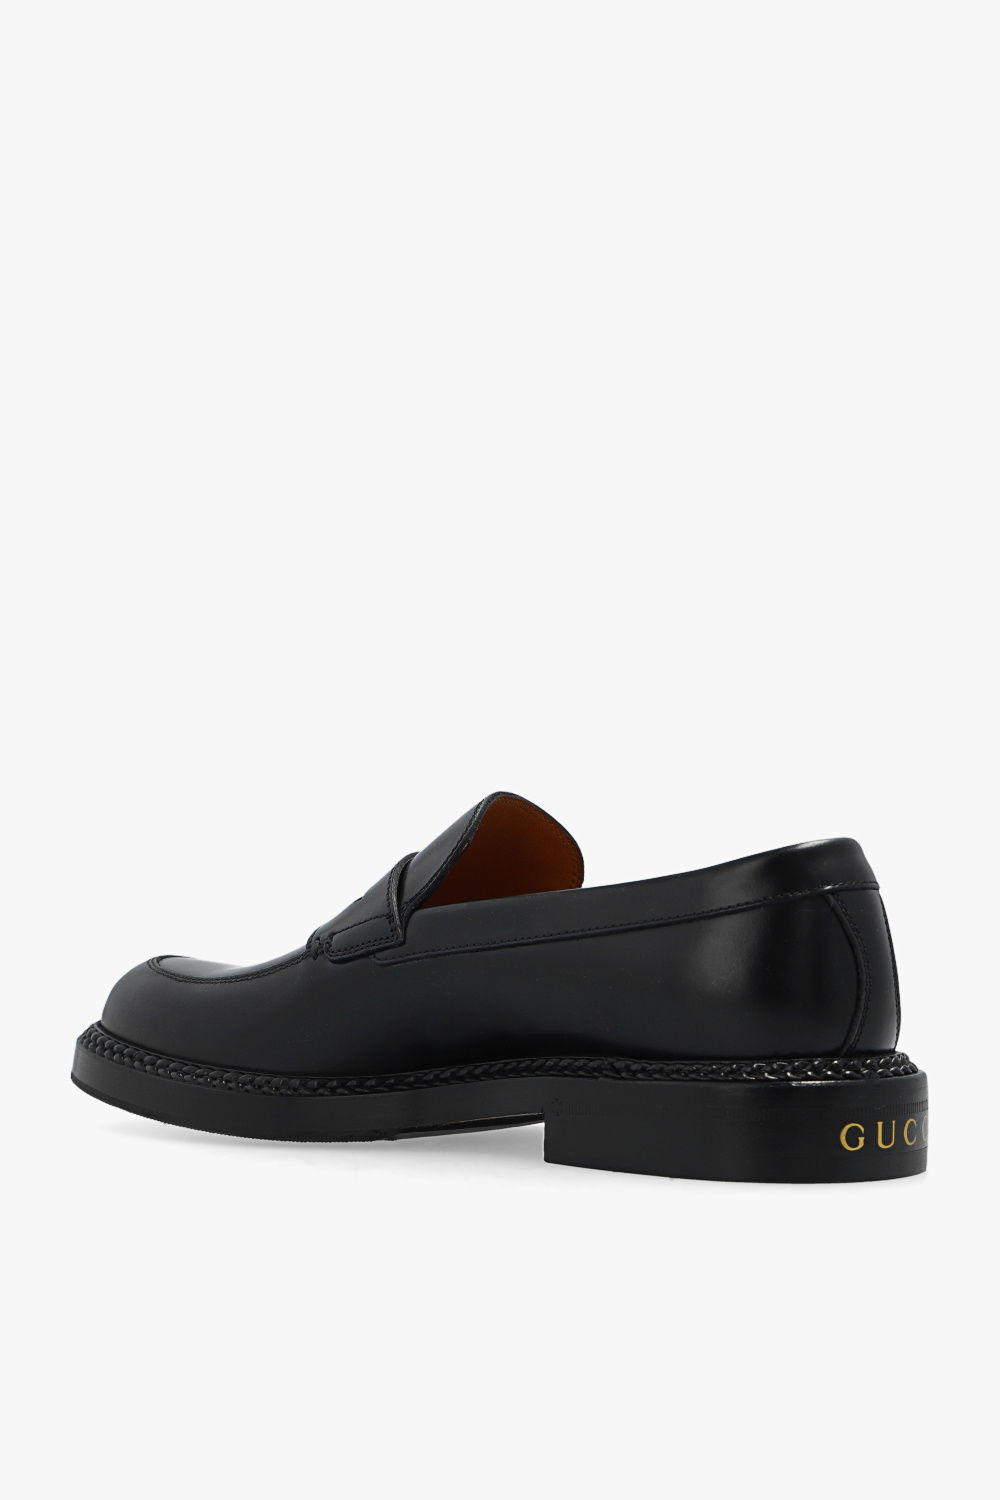 gucci Mini Leather loafers